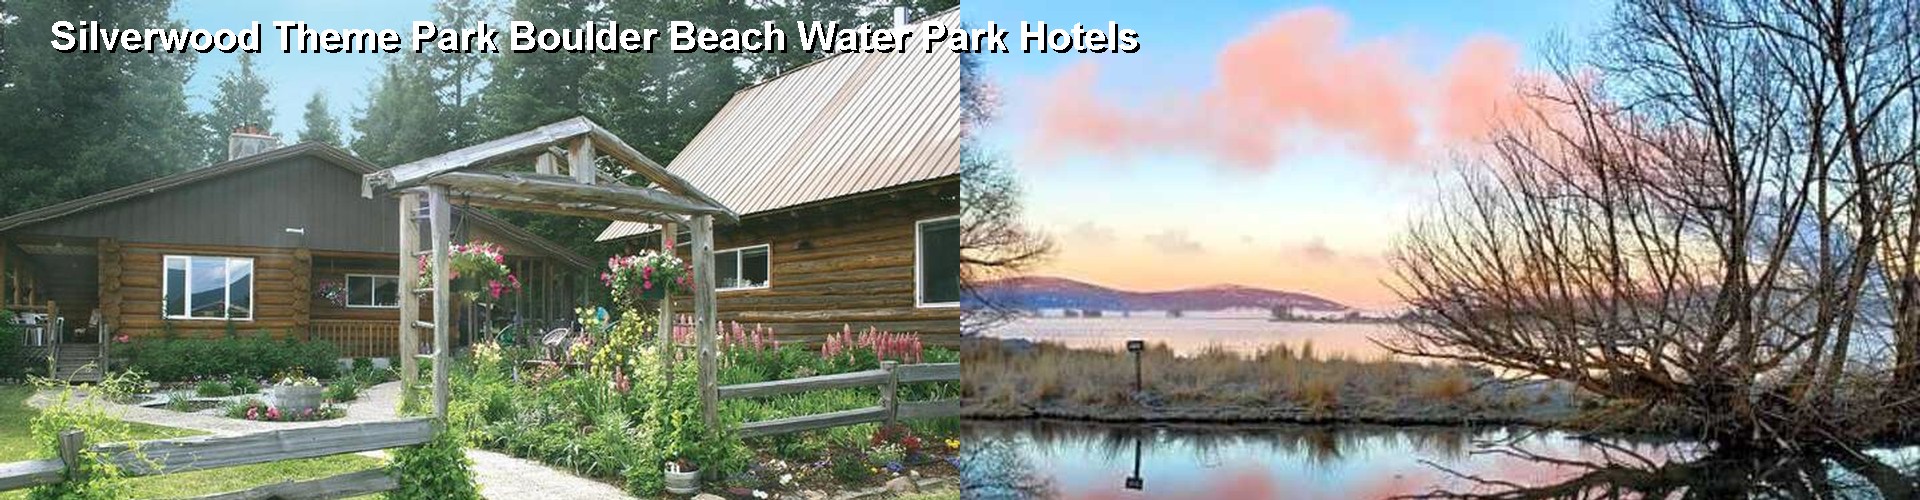 4 Best Hotels near Silverwood Theme Park Boulder Beach Water Park